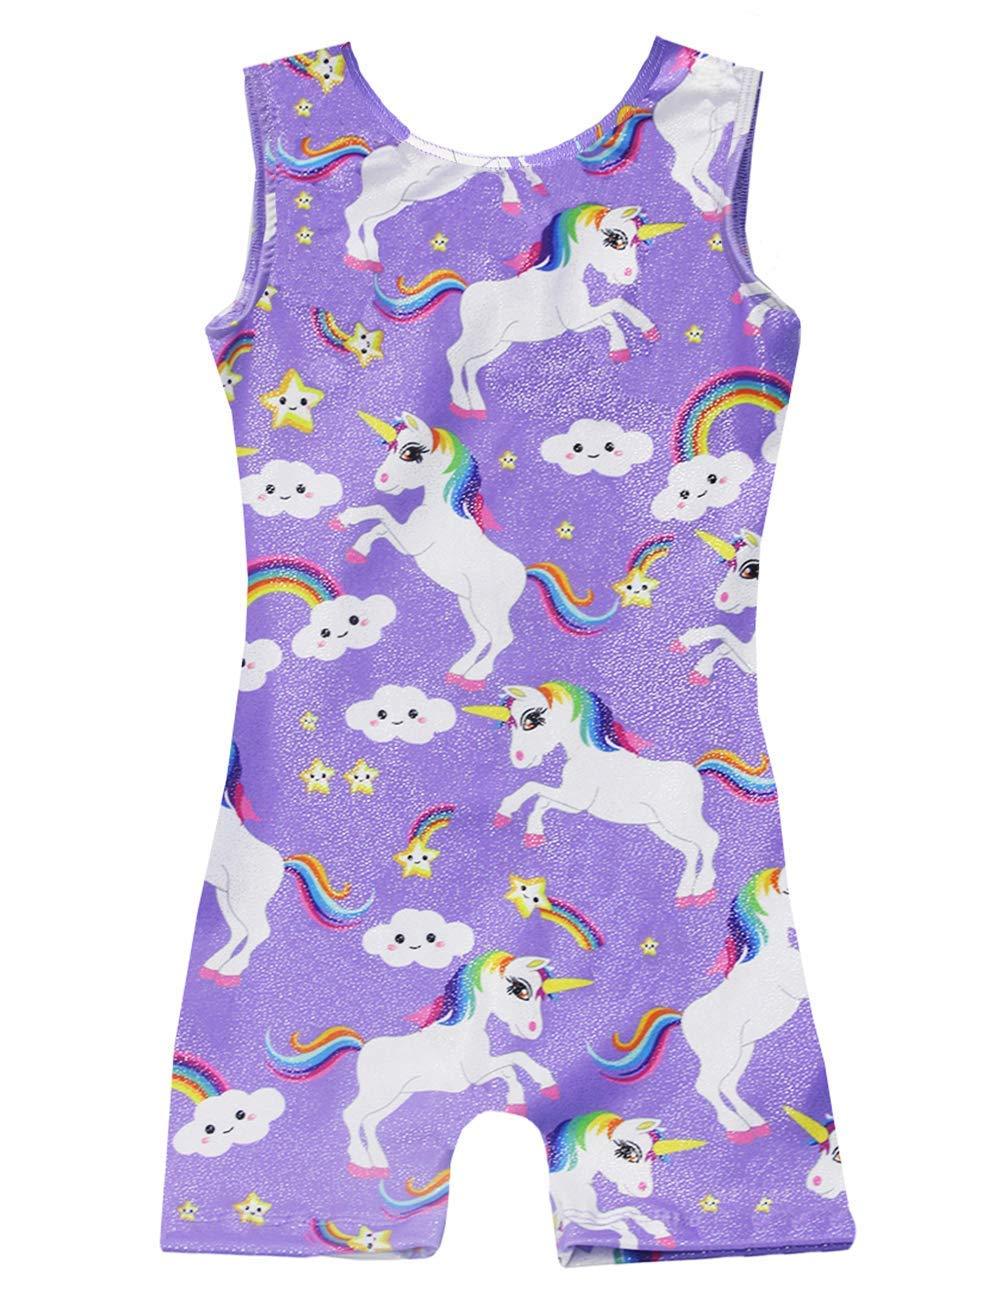 [AUSTRALIA] - Leotards for Girls Gymnastics Kids Children Biketard With Shorts Sparkly Unicorn Dance Unitards（Multiple Colors） Purple-unicorn 130(6-7Y) 